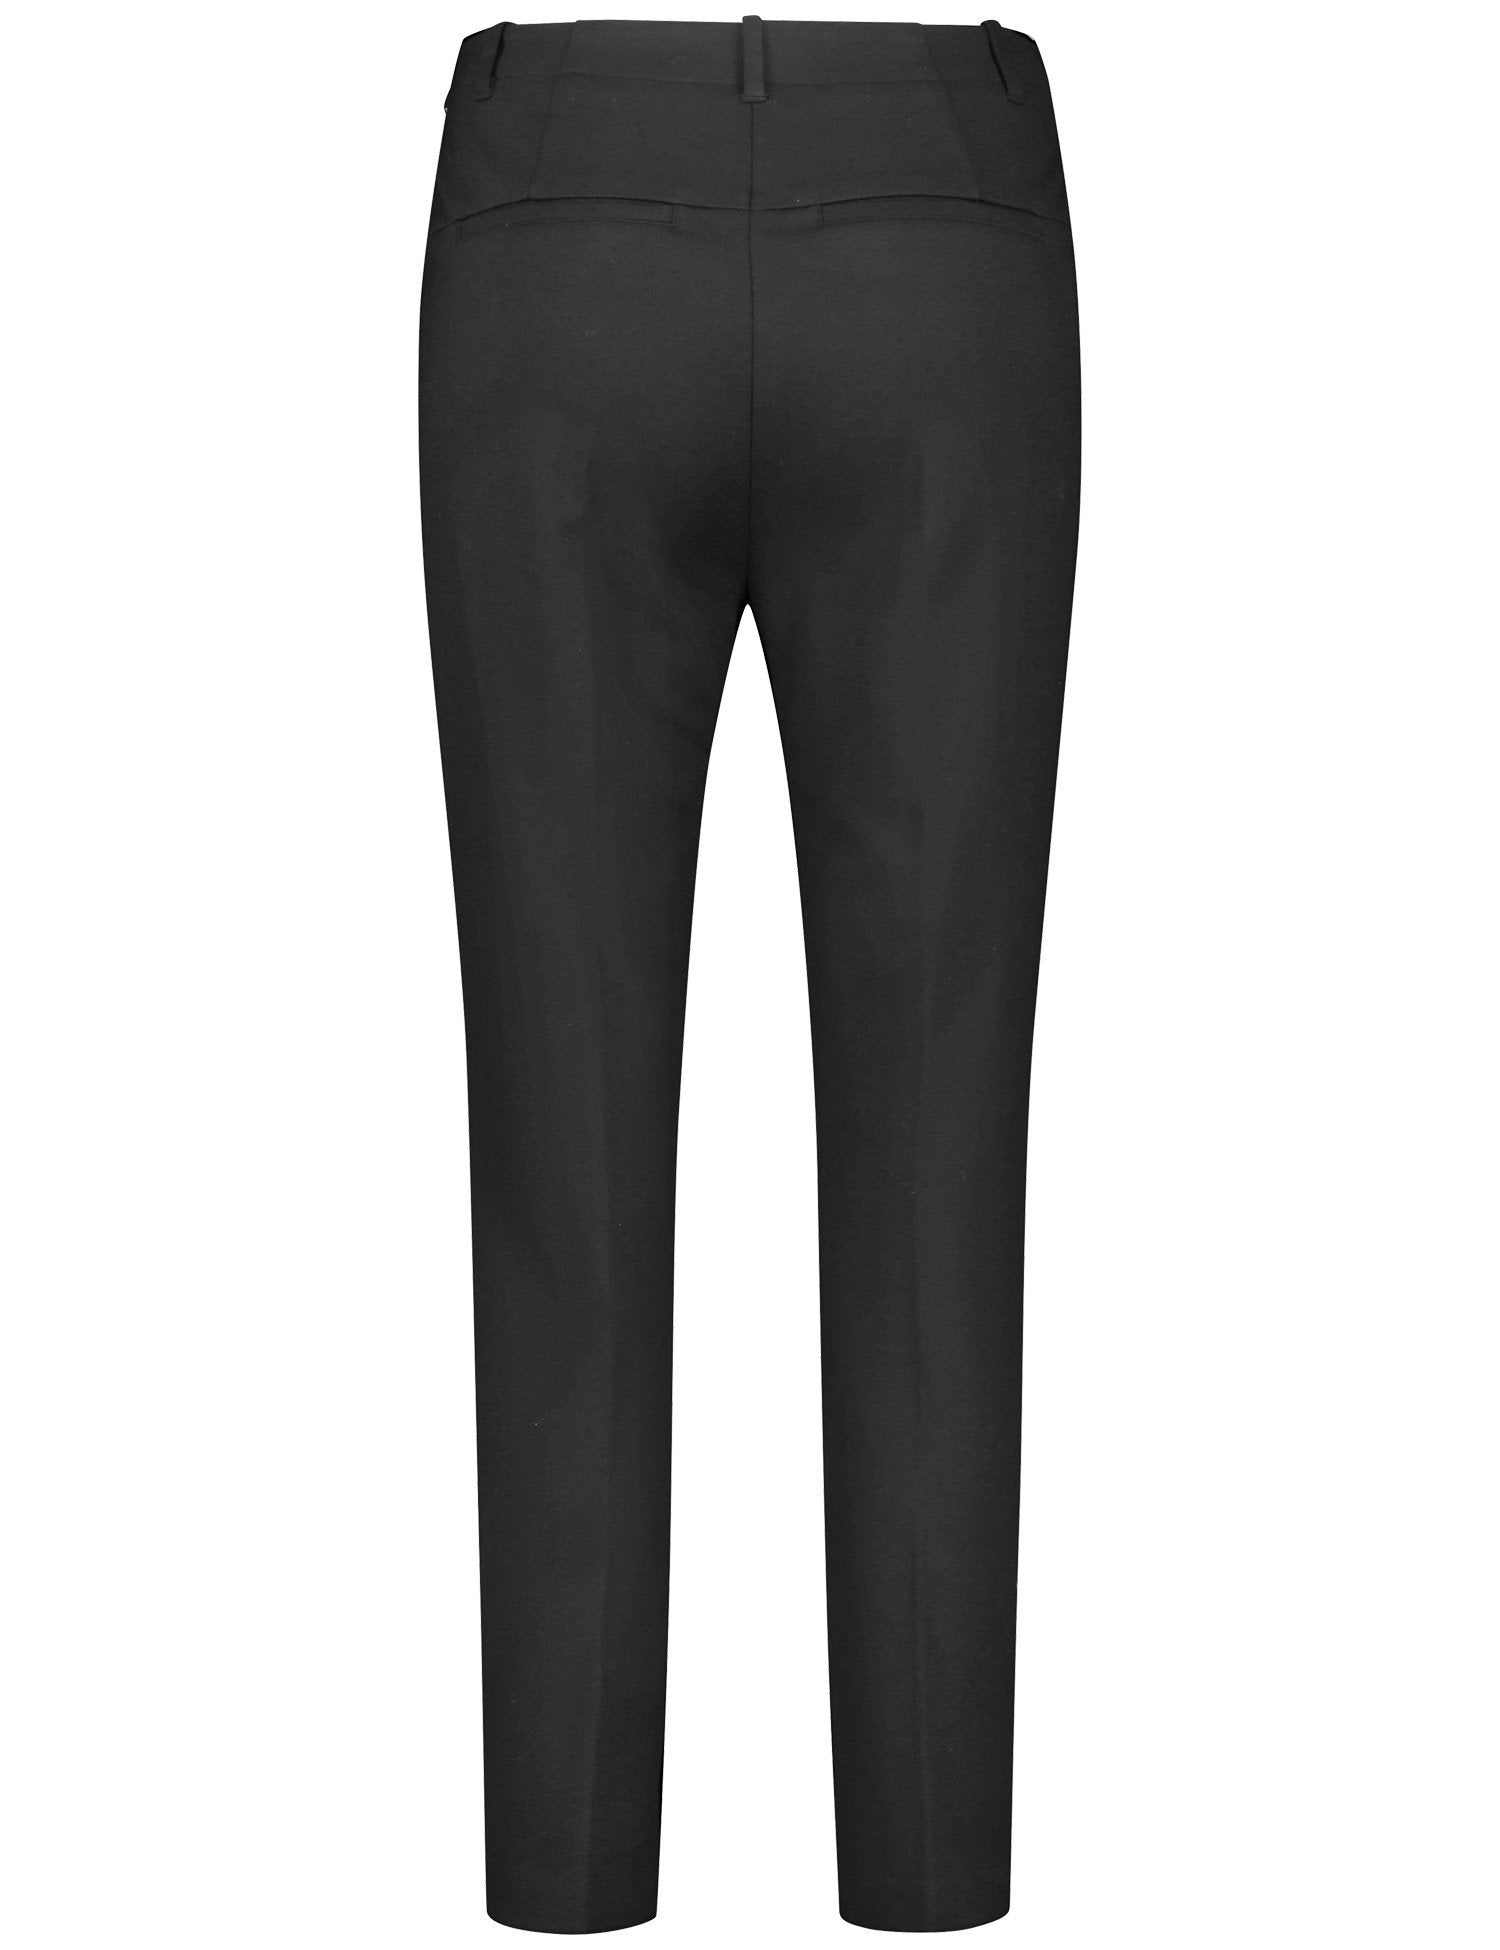 Smart 7/8-Length Trousers, Slim Fit_920983-19900_1100_03